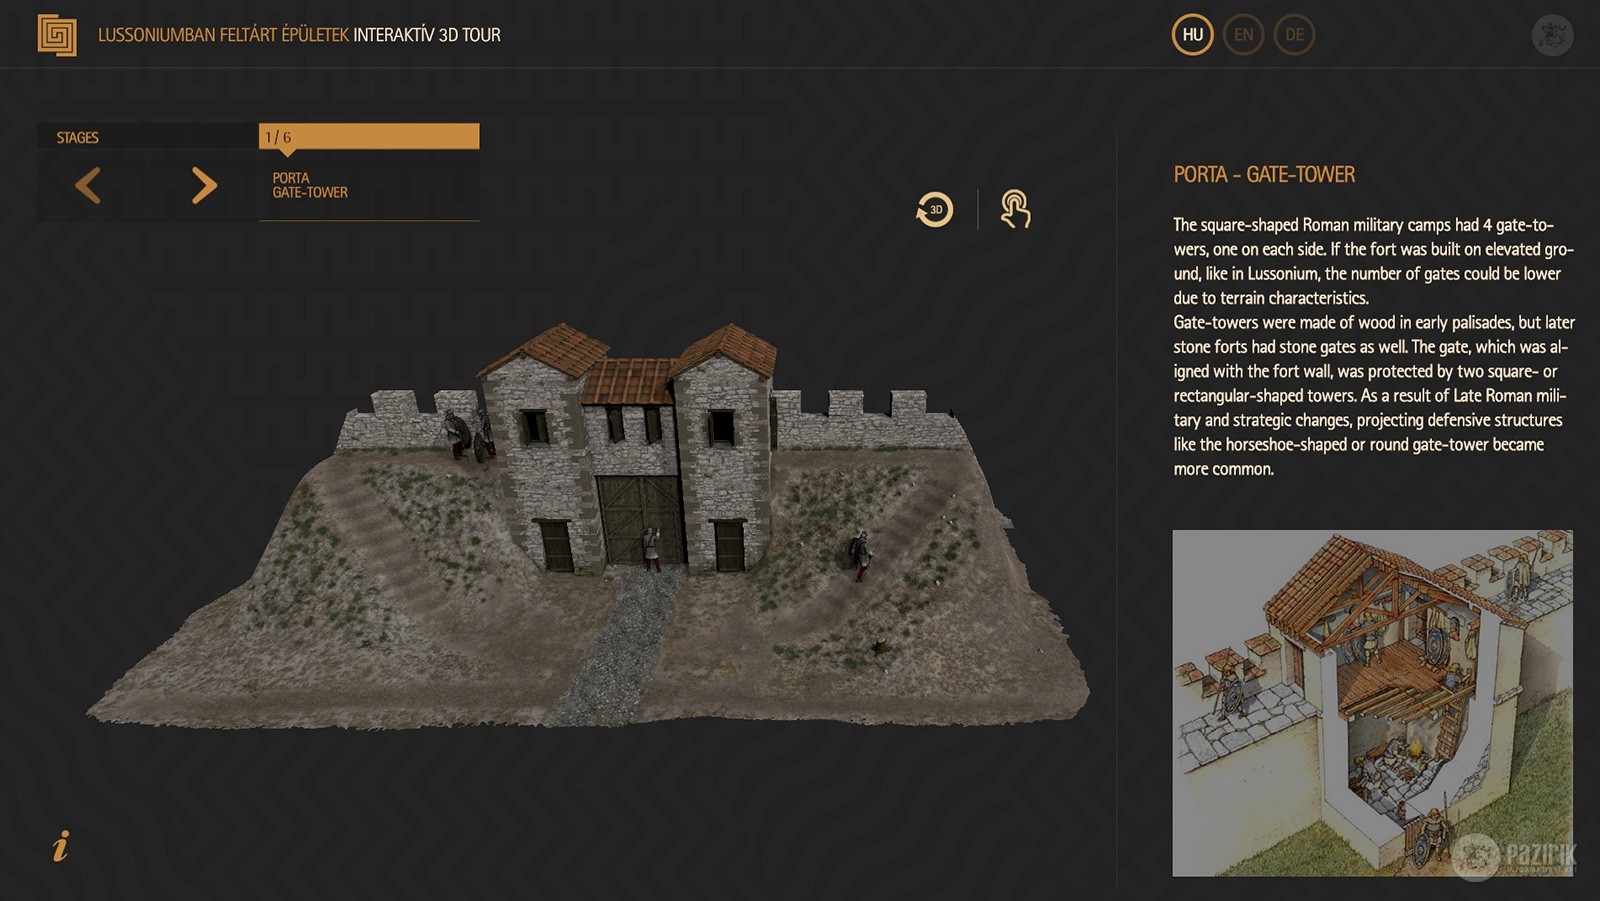 Interactive 3D tour applications - Software